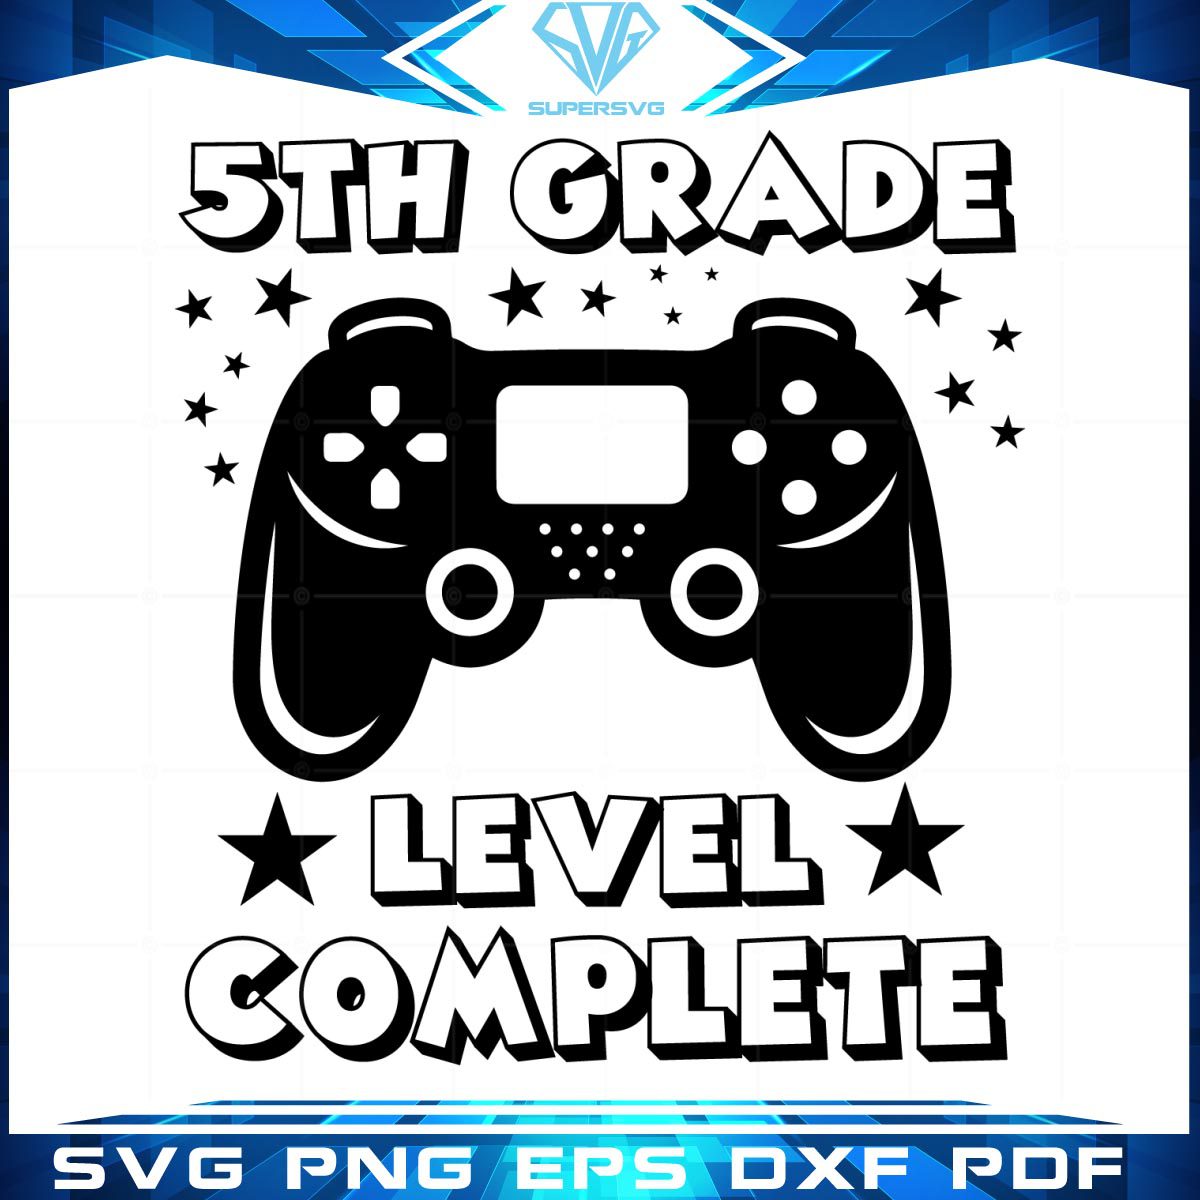 Fifth Grade Level Complete School Svg